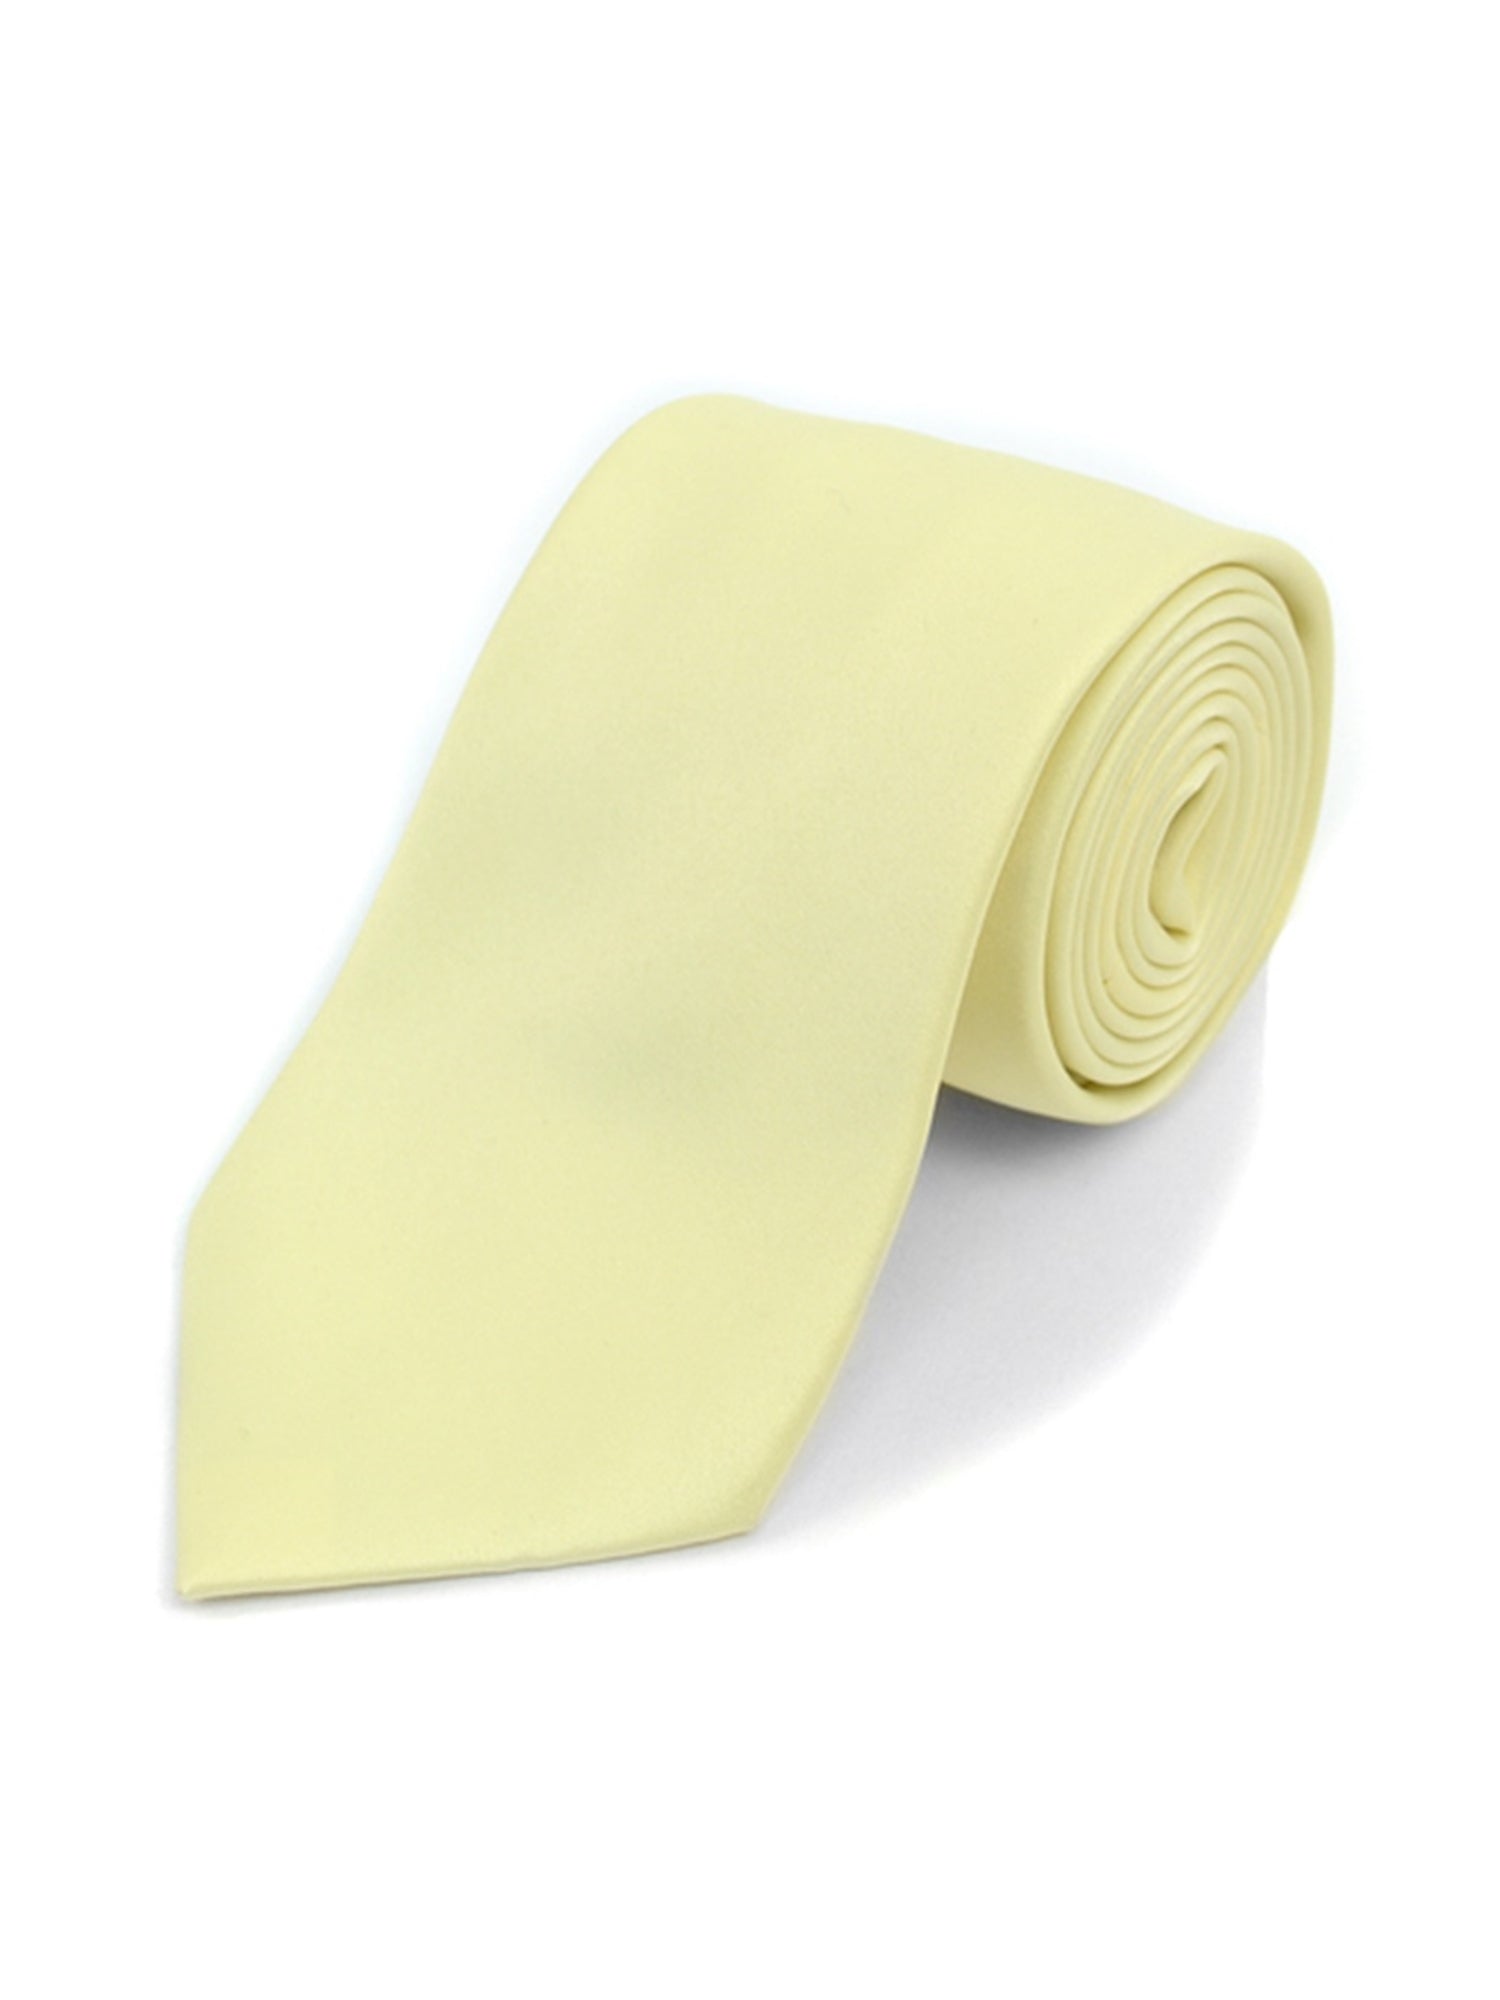 Boy's Age 12-18 Solid Color Poly Neck Tie Boy's Solid Color Neck Tie TheDapperTie Light Yellow 49" 